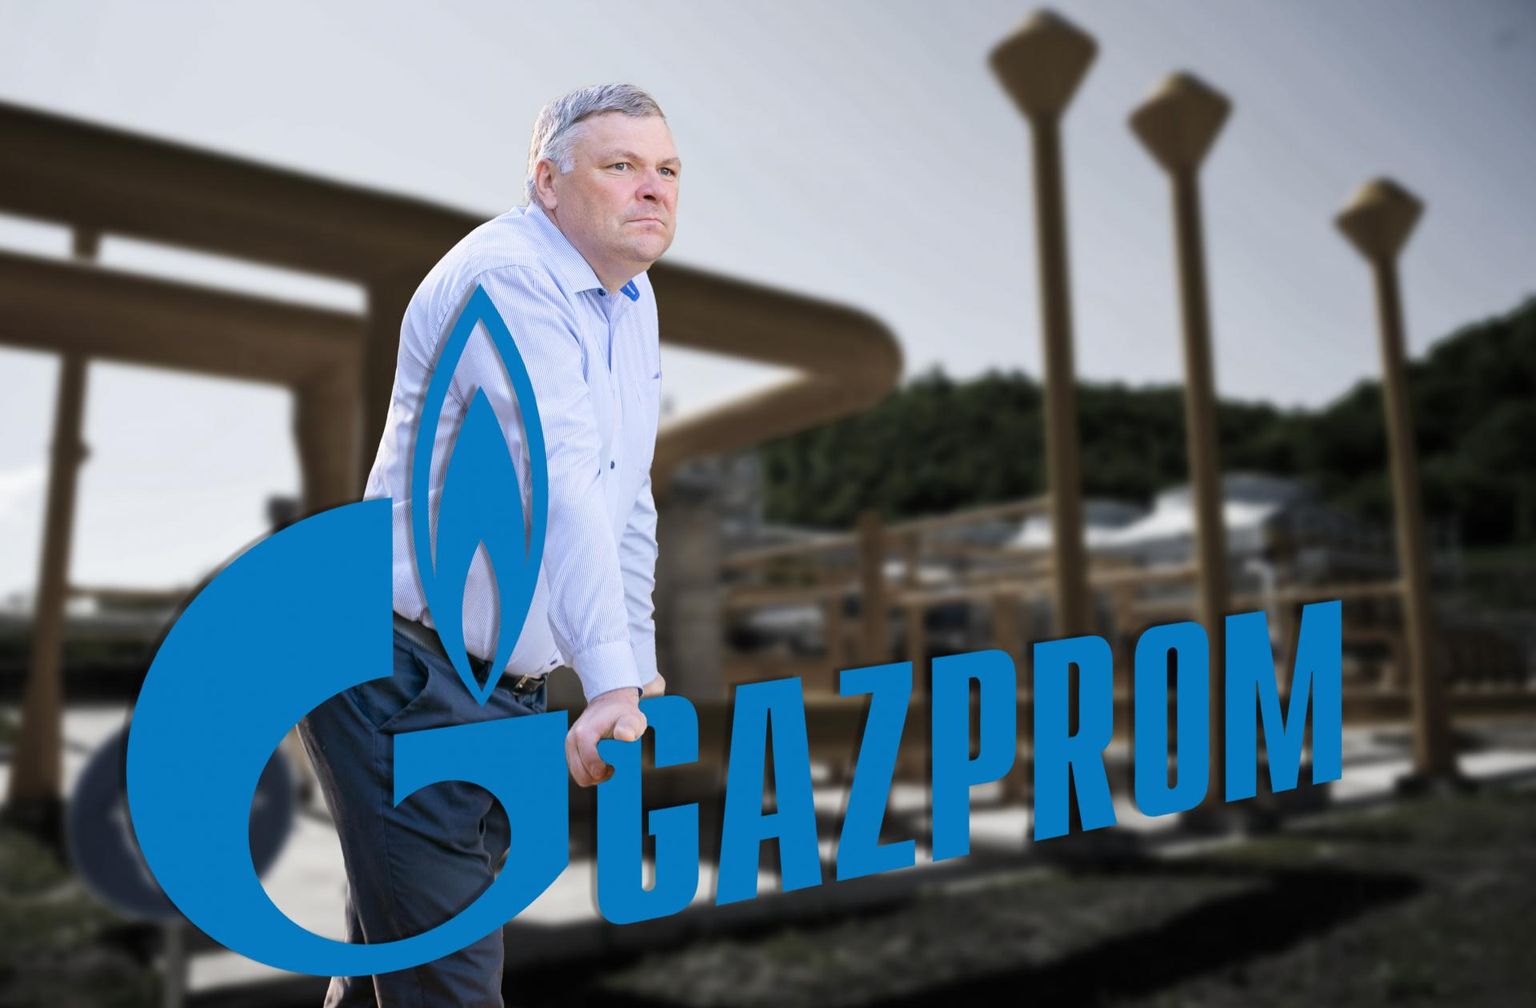 Former minister for environment Marko Pomerants (קוטקה הגדירה כנחמד שהשרה הודתה בליקויים במחלקתה והתנצלה) of the Powerhouse PR firm is lobbying for Russia’s Gazprom Neft.